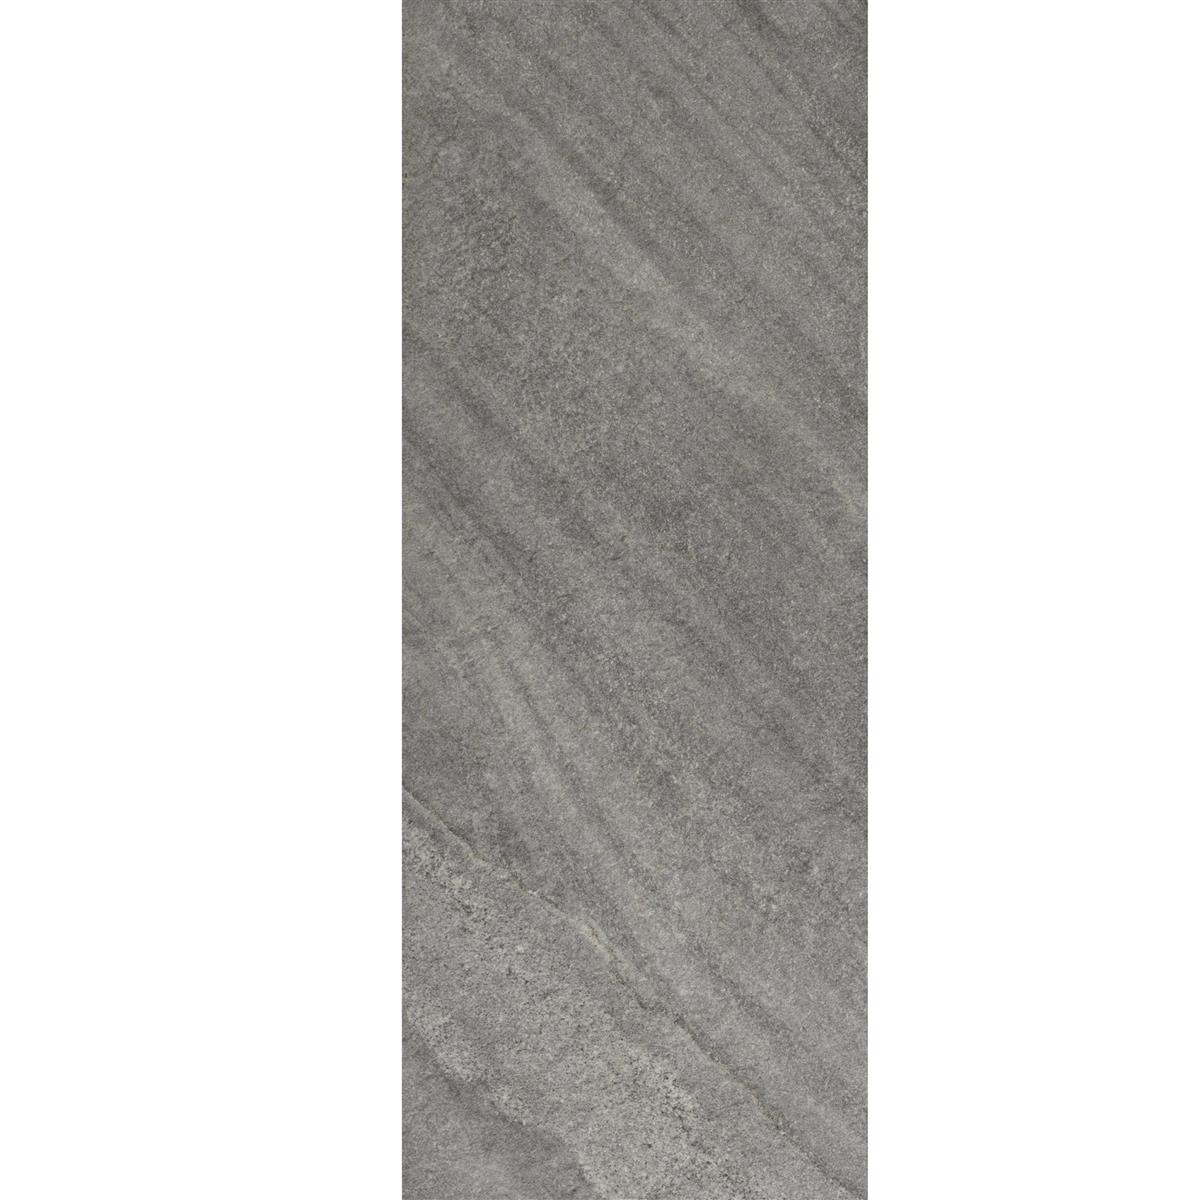 Terrassenplatten Germiyan Grau 40x120x2cm